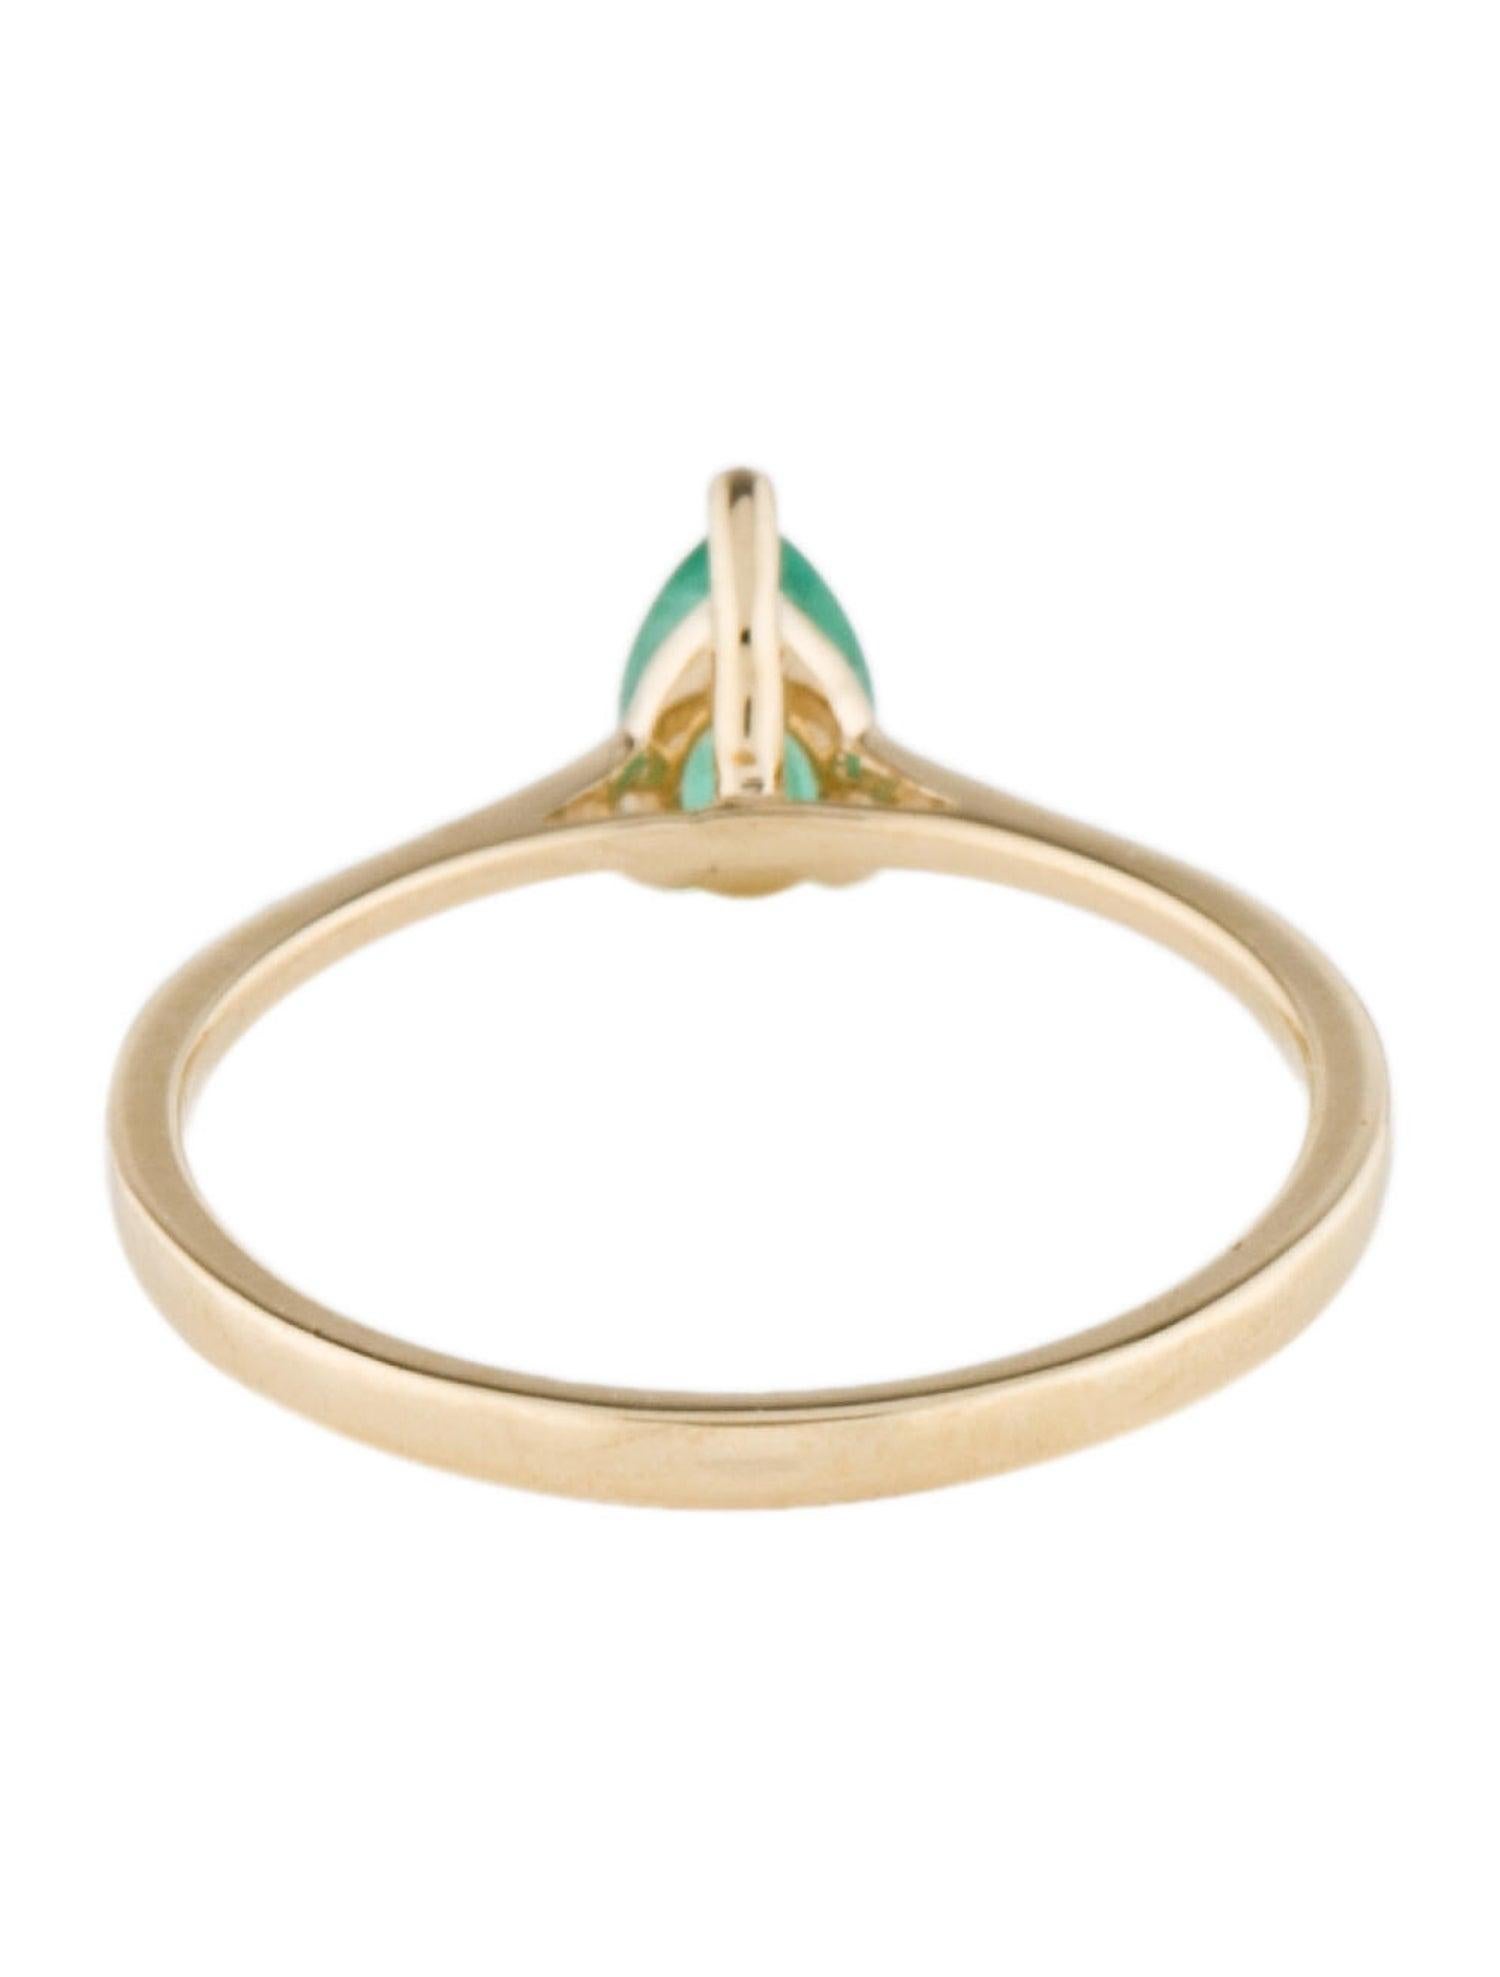 Brilliant Cut Opulent 14K Emerald Cocktail Ring, Size 7 - Elegant Statement Jewelry